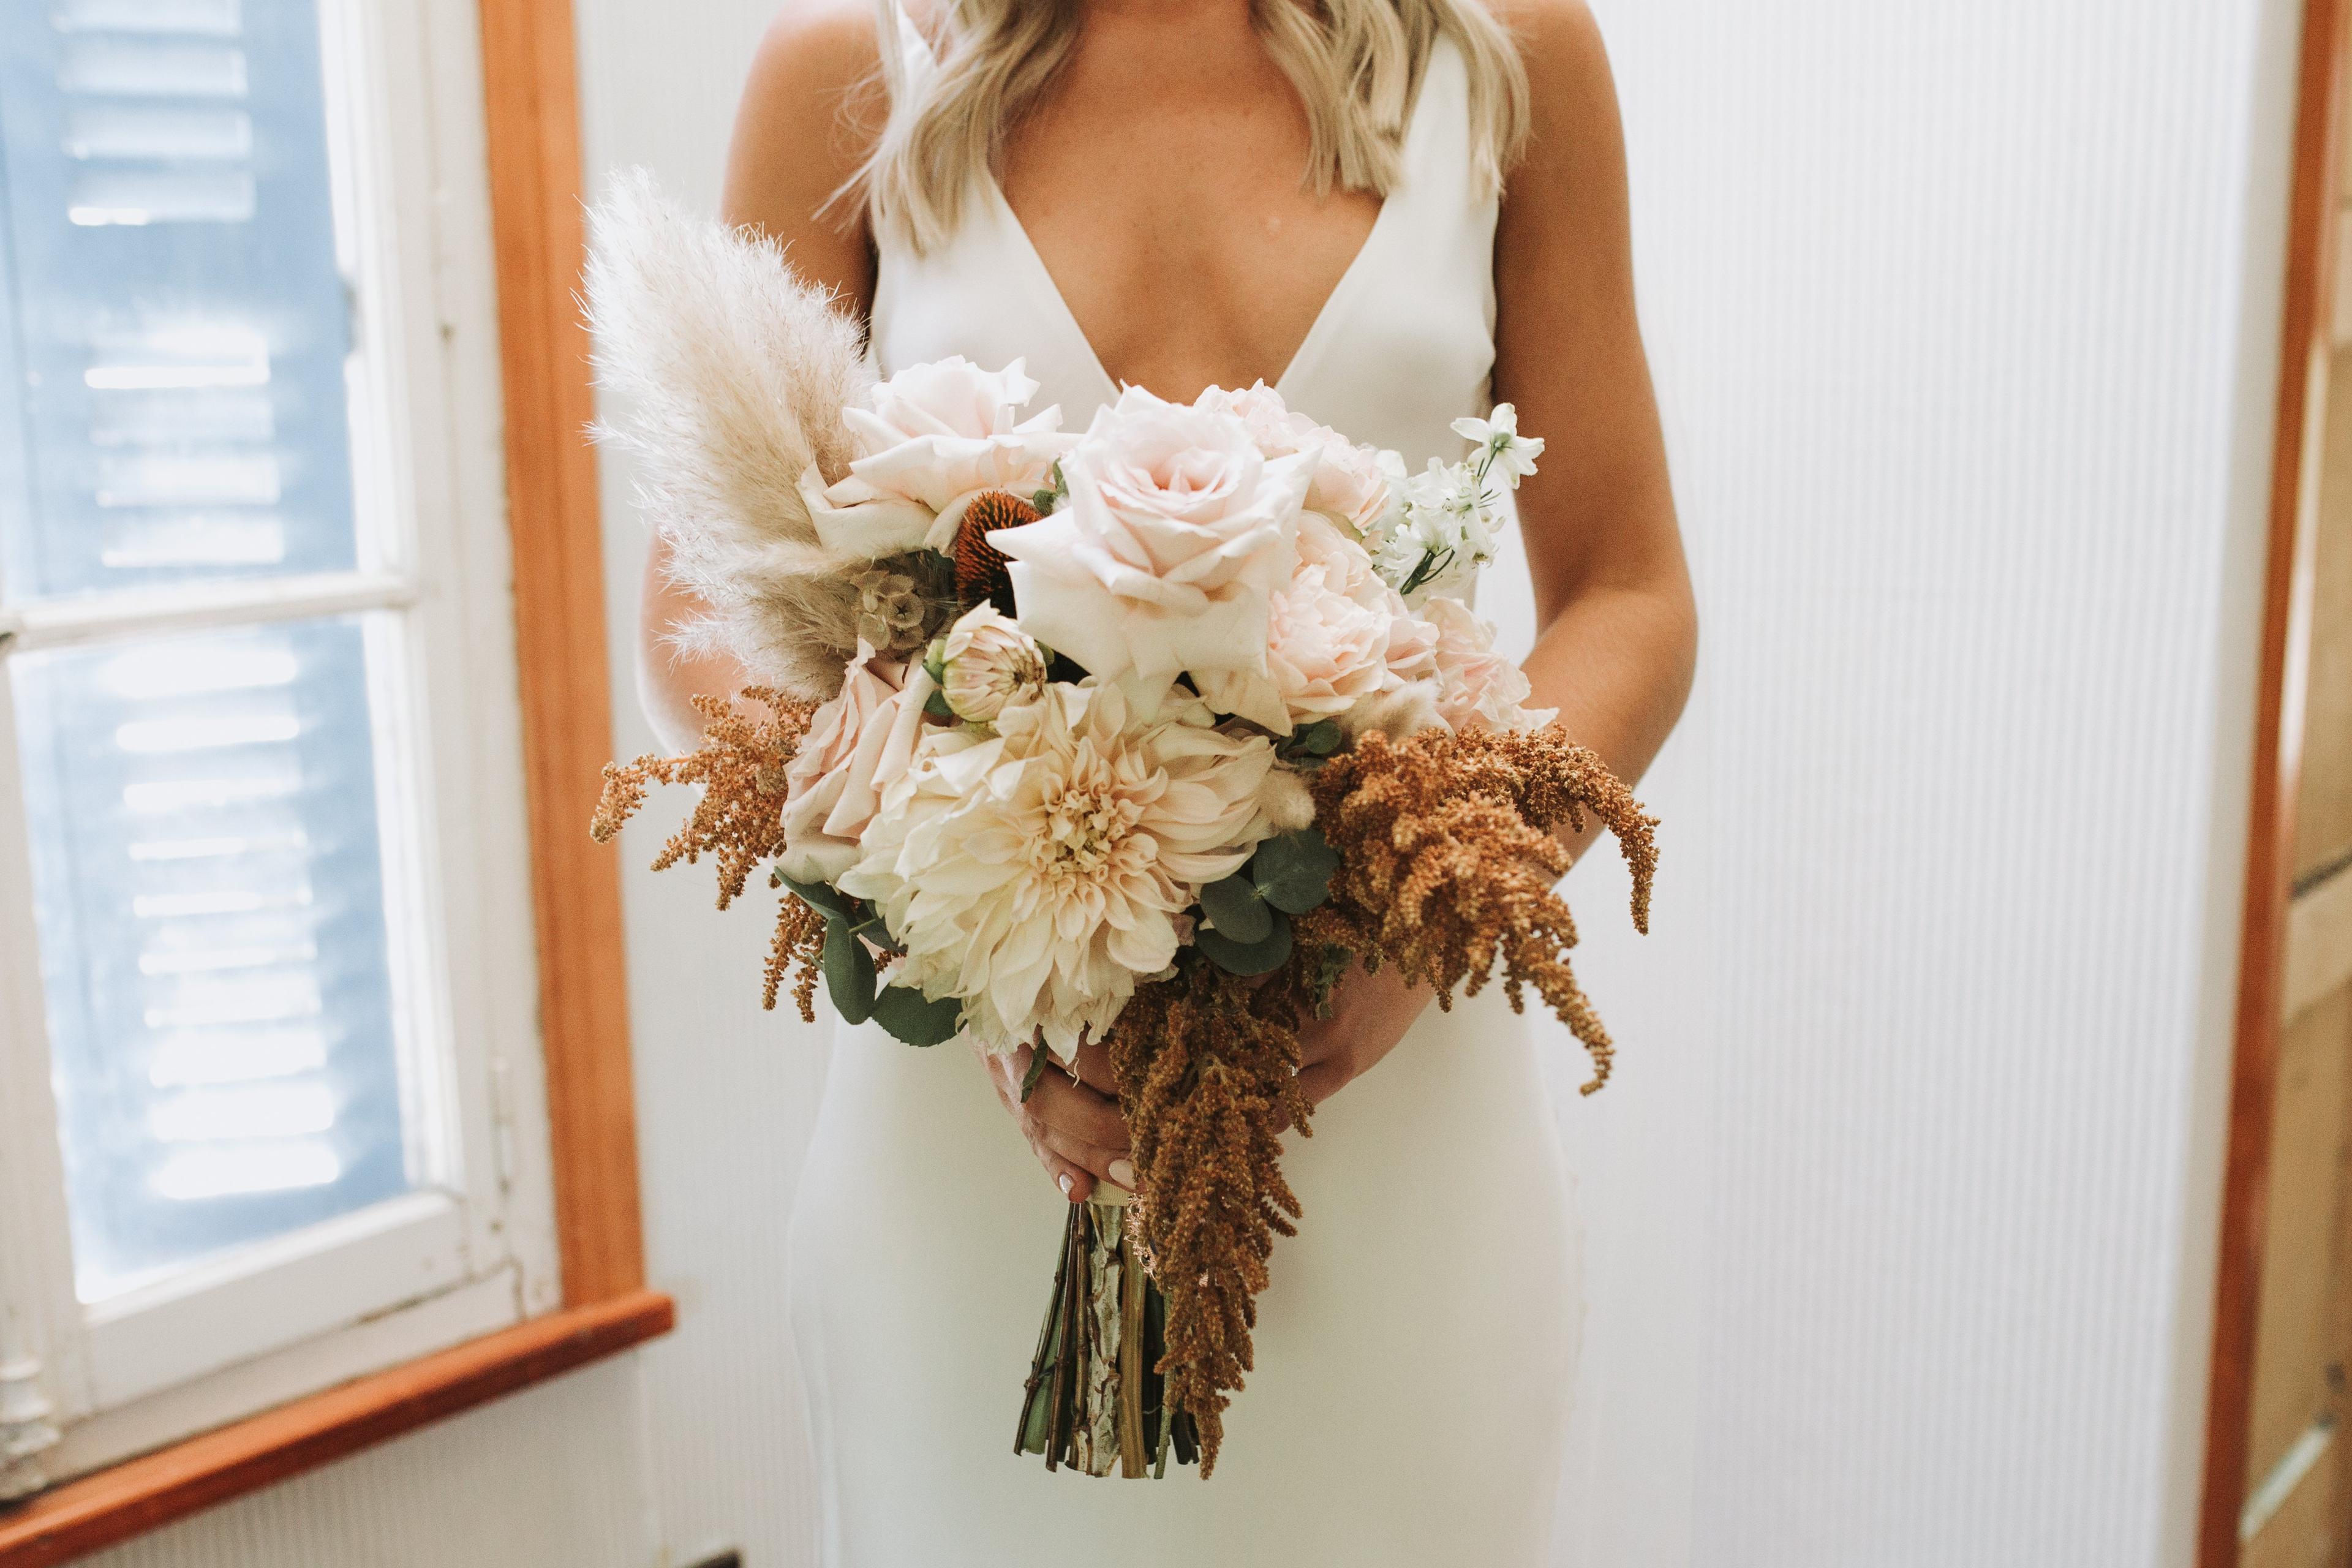 Bridal bouquet and wedding dress